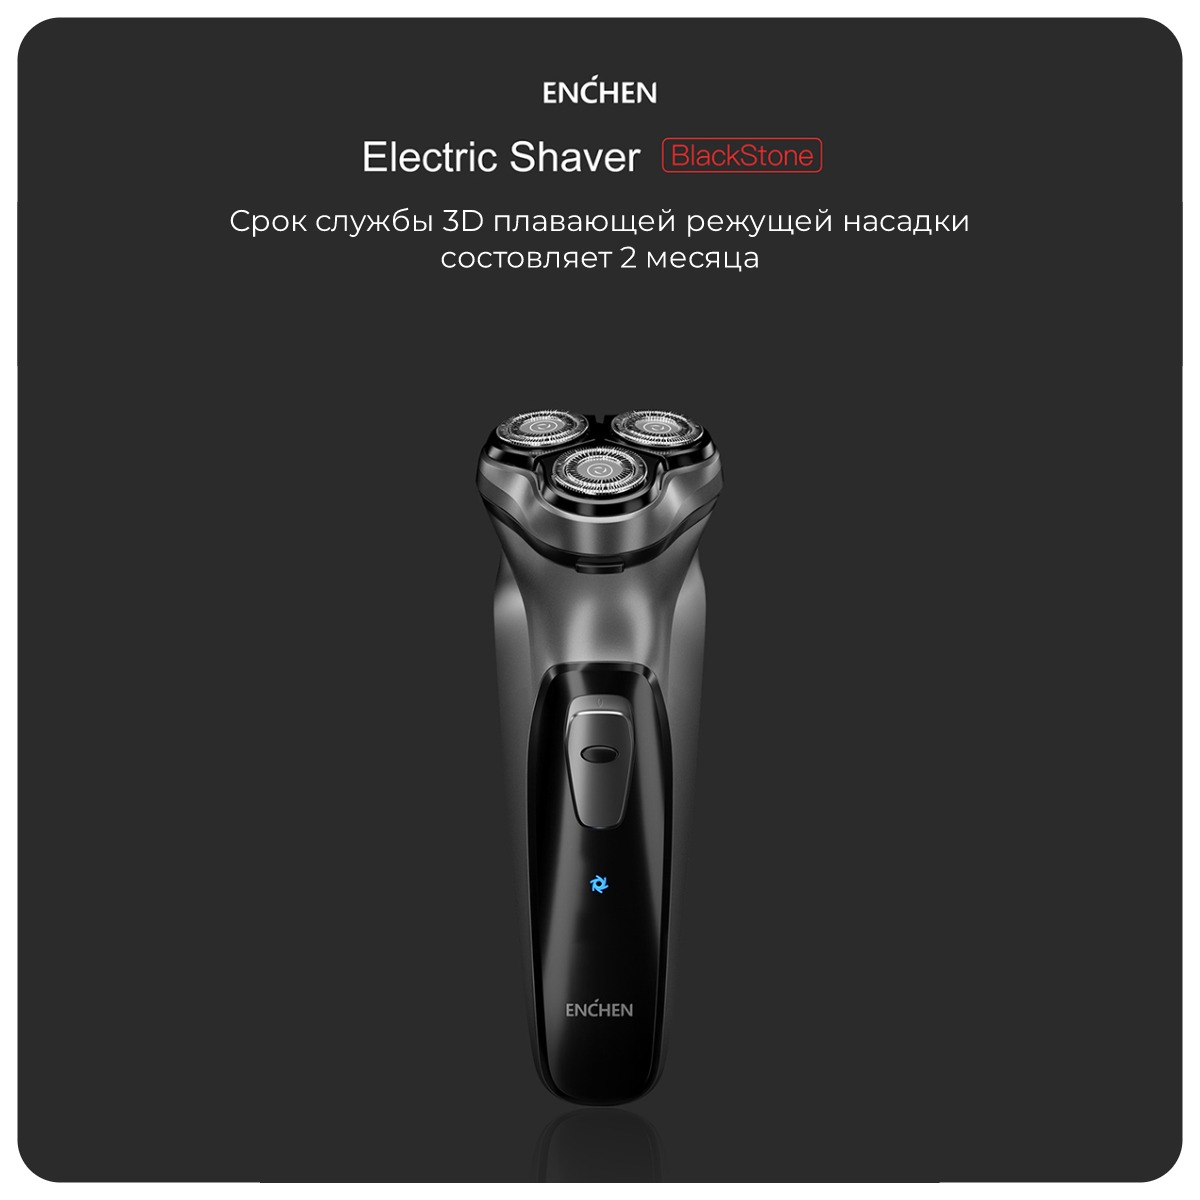 XiaoMi-Enchen-BlackStone-Electric-Shaver-01